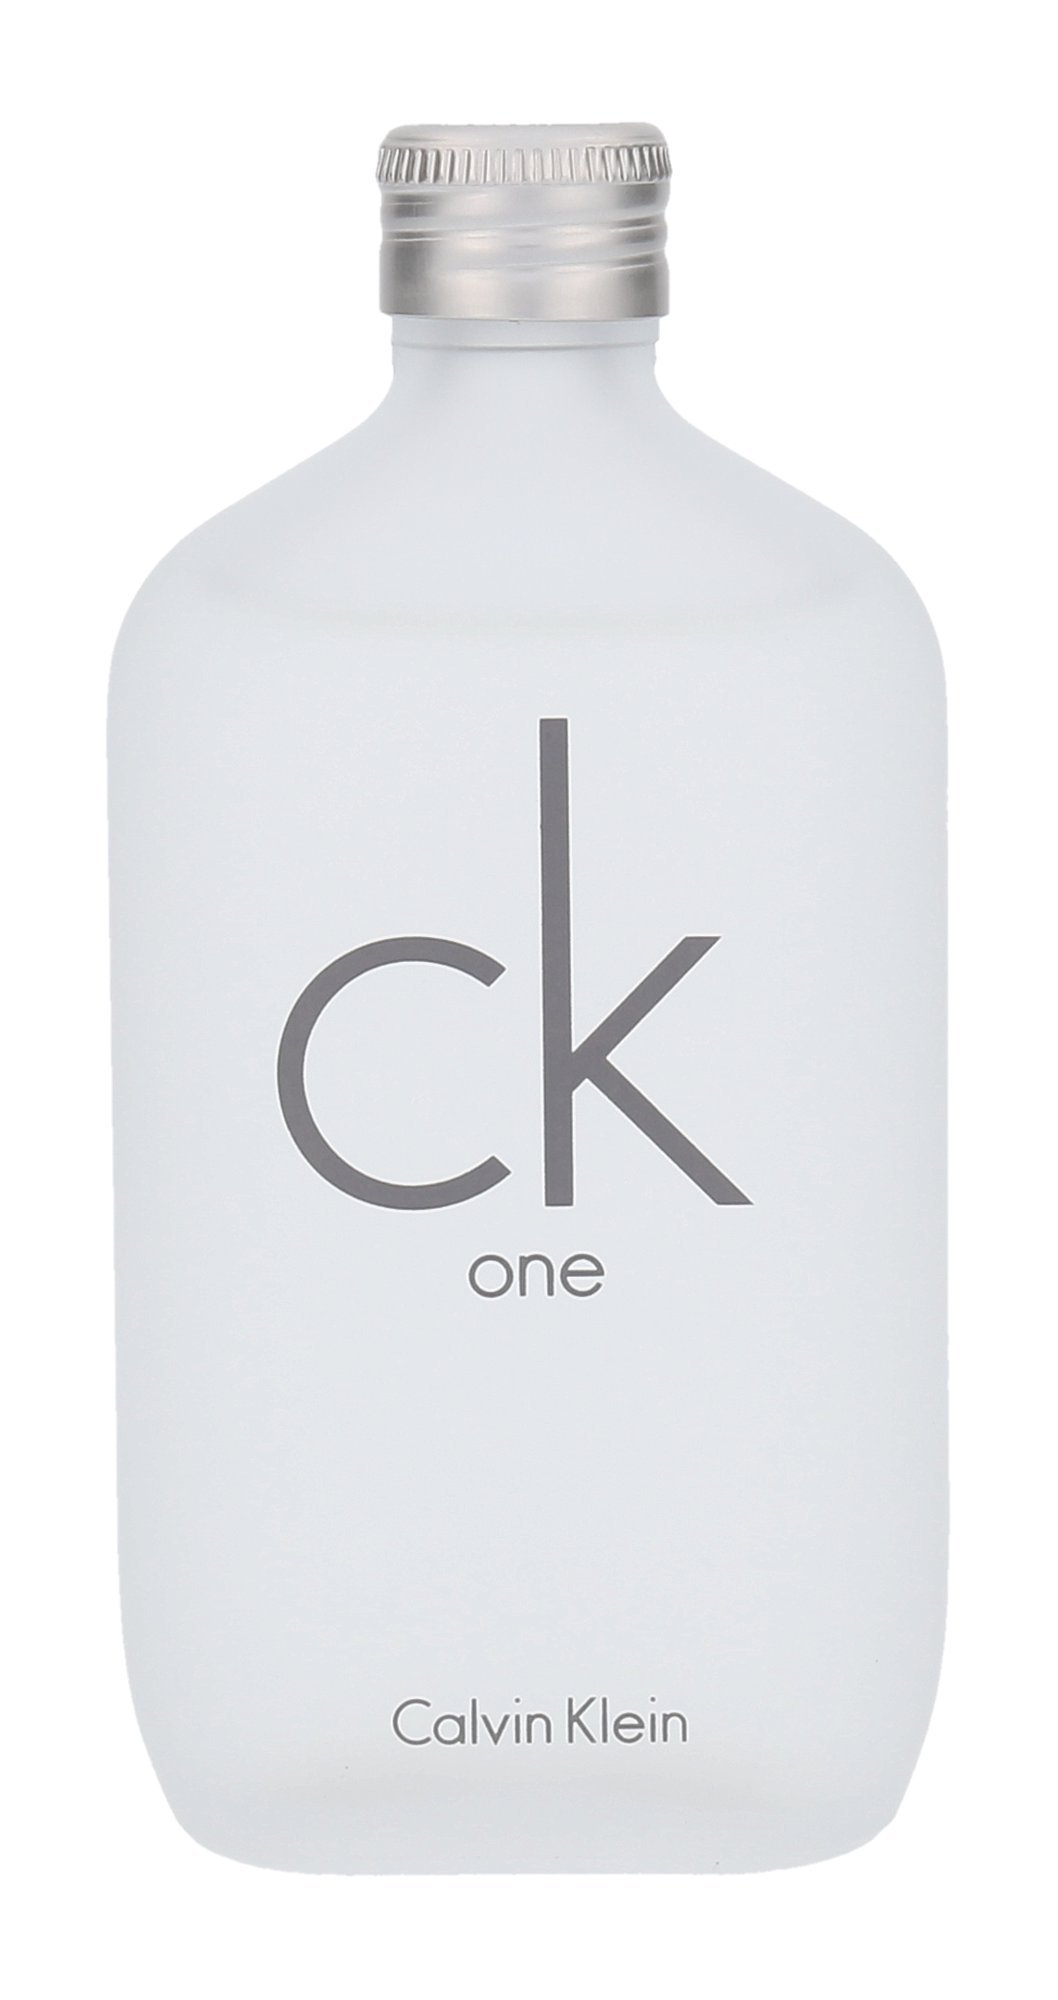 Calvin Klein CK One, Toaletní voda 50ml